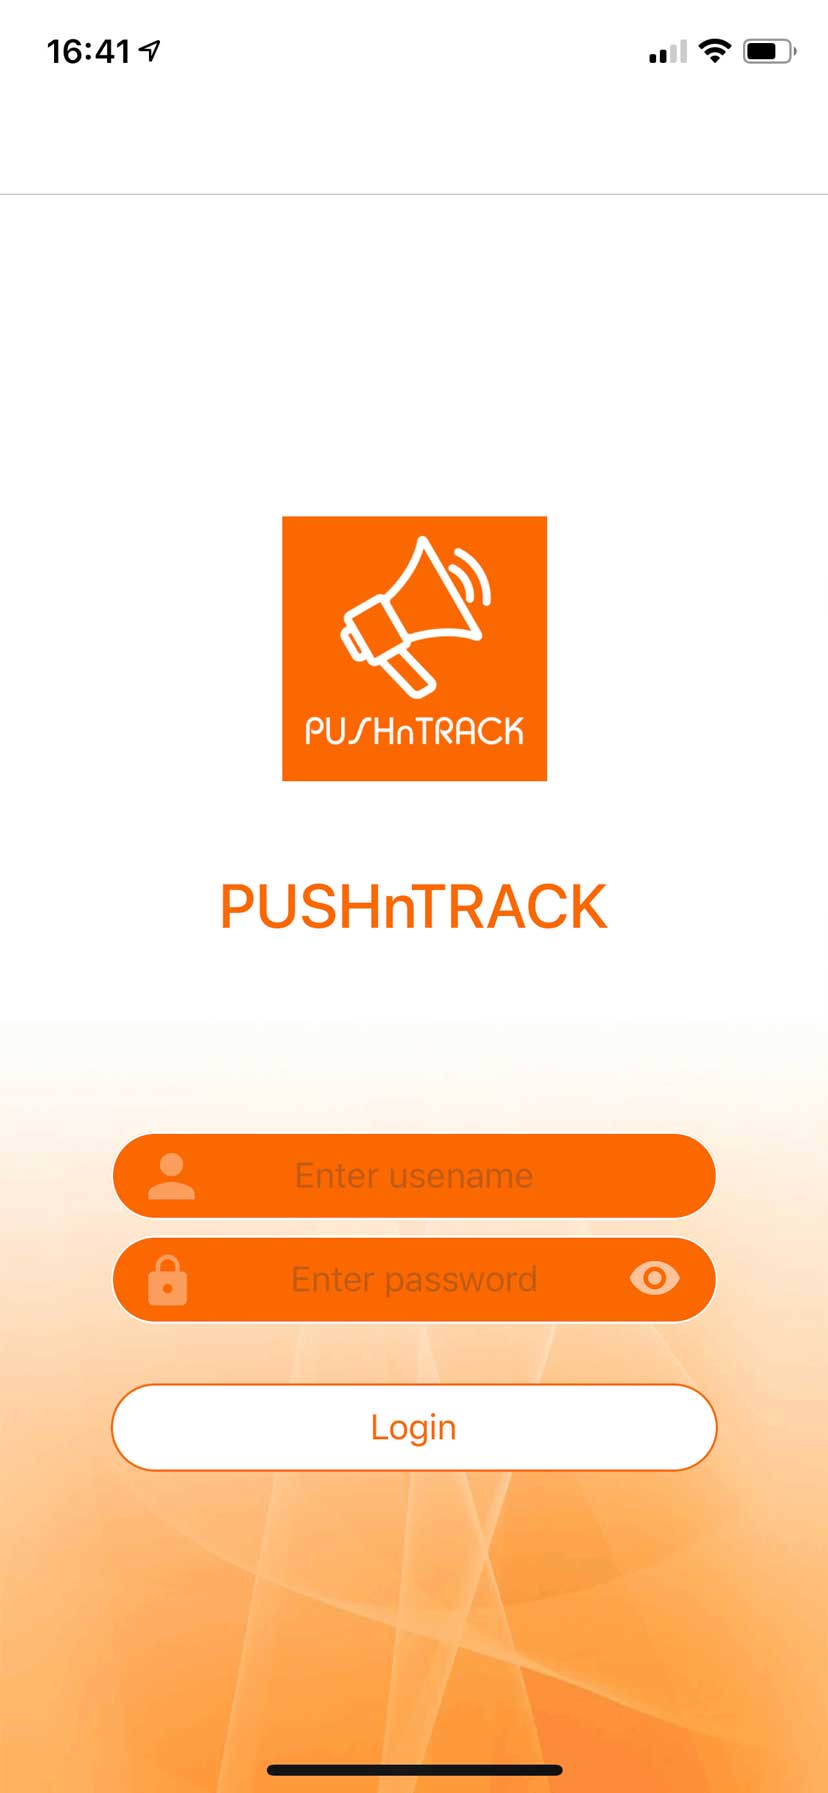 Push&Track login